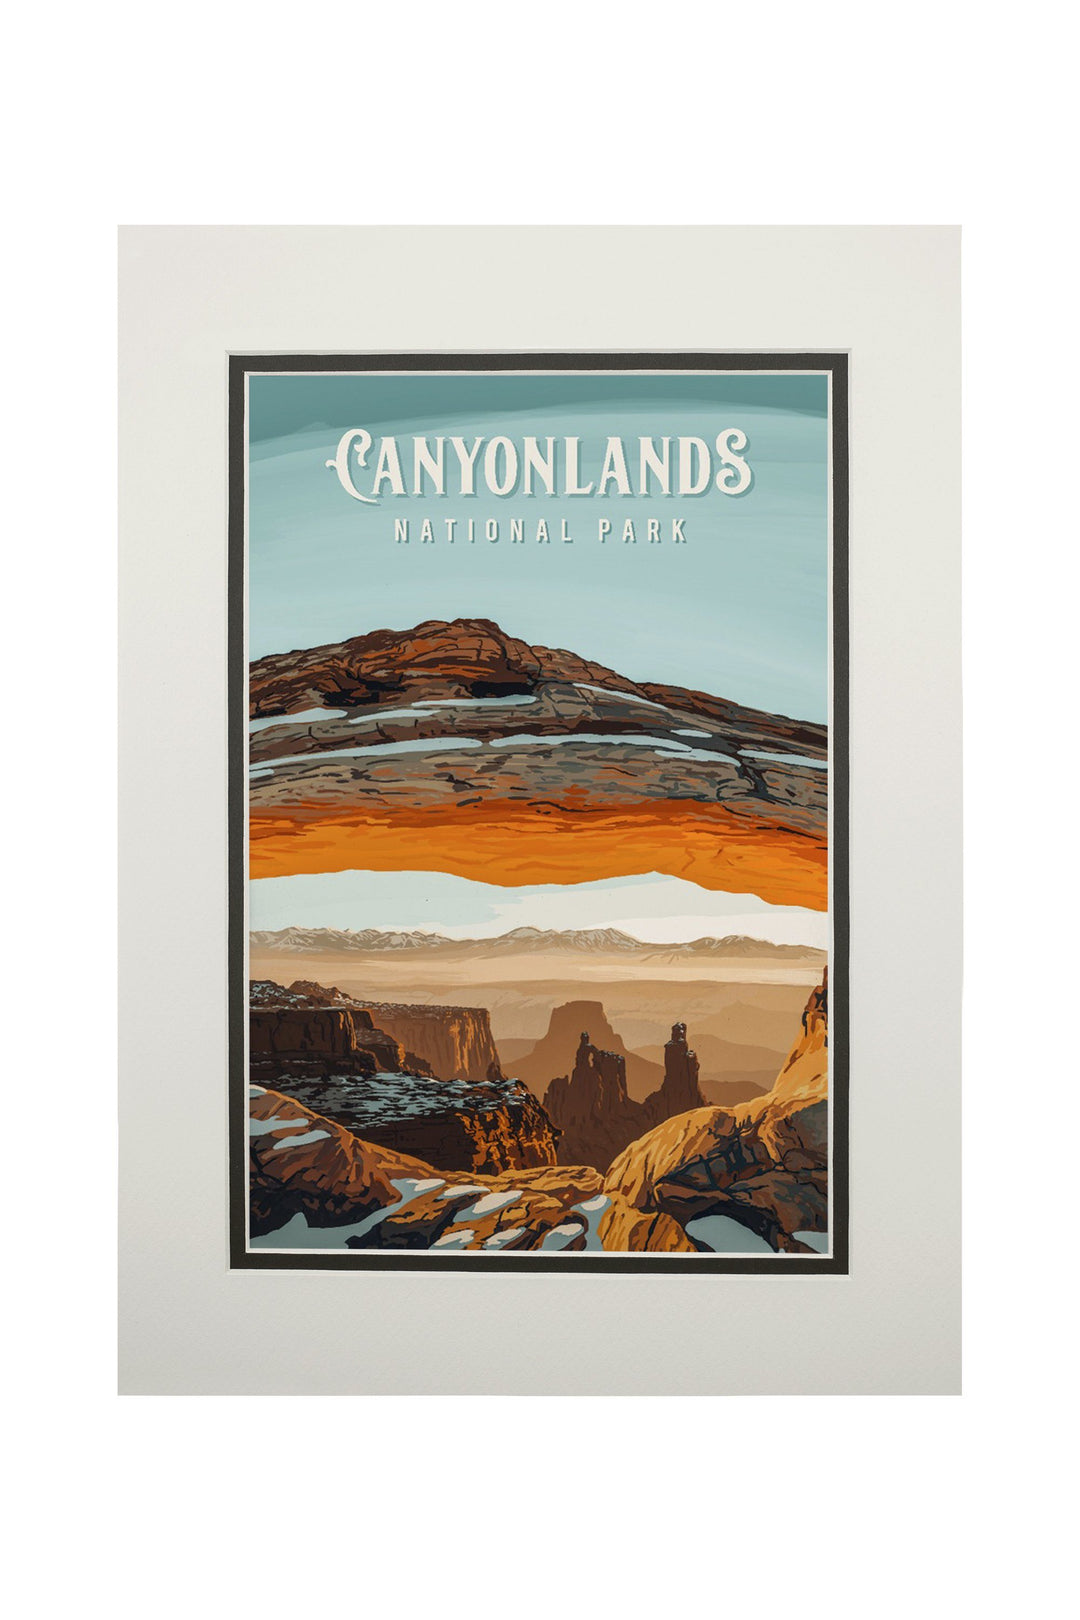 Canyonlands National Park, Utah, Painterly National Park Series, Art Prints and Metal Signs Art Lantern Press 11 x 14 Matted Art Print 